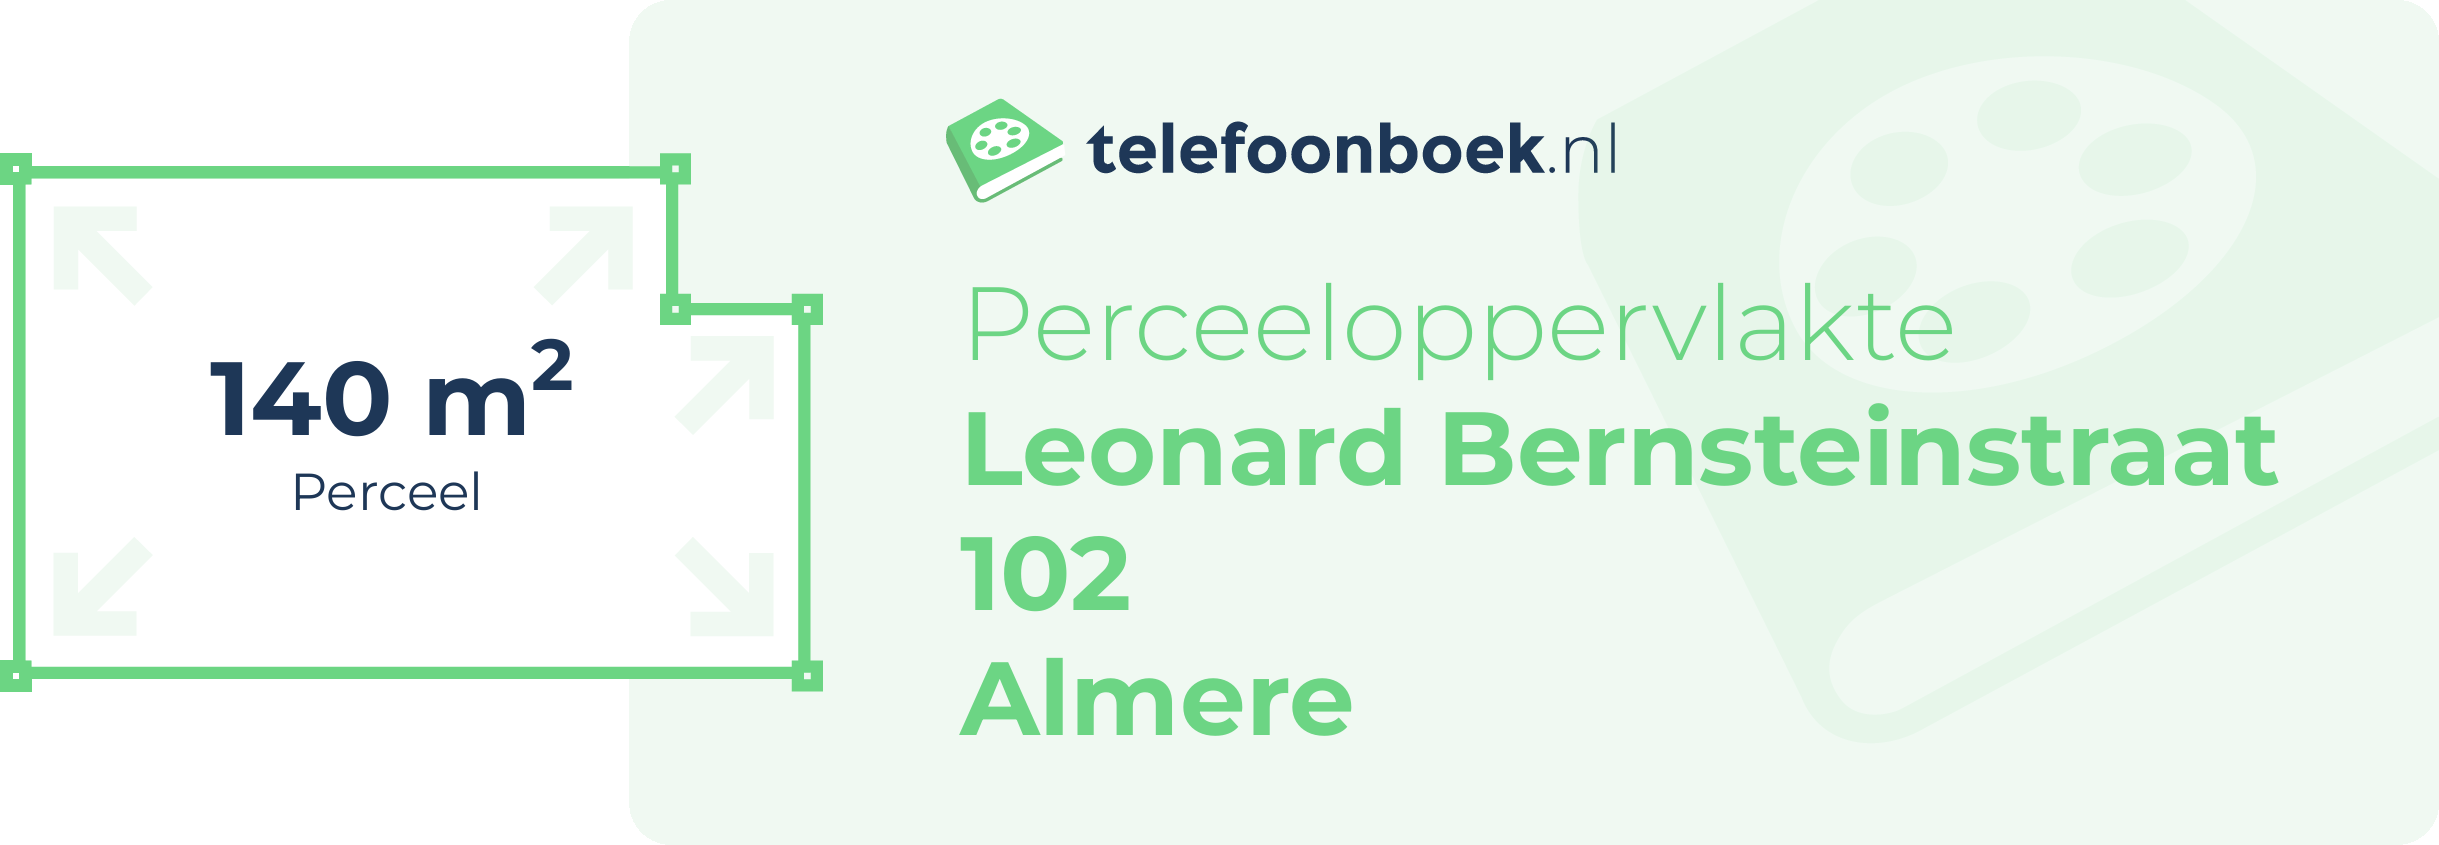 Perceeloppervlakte Leonard Bernsteinstraat 102 Almere